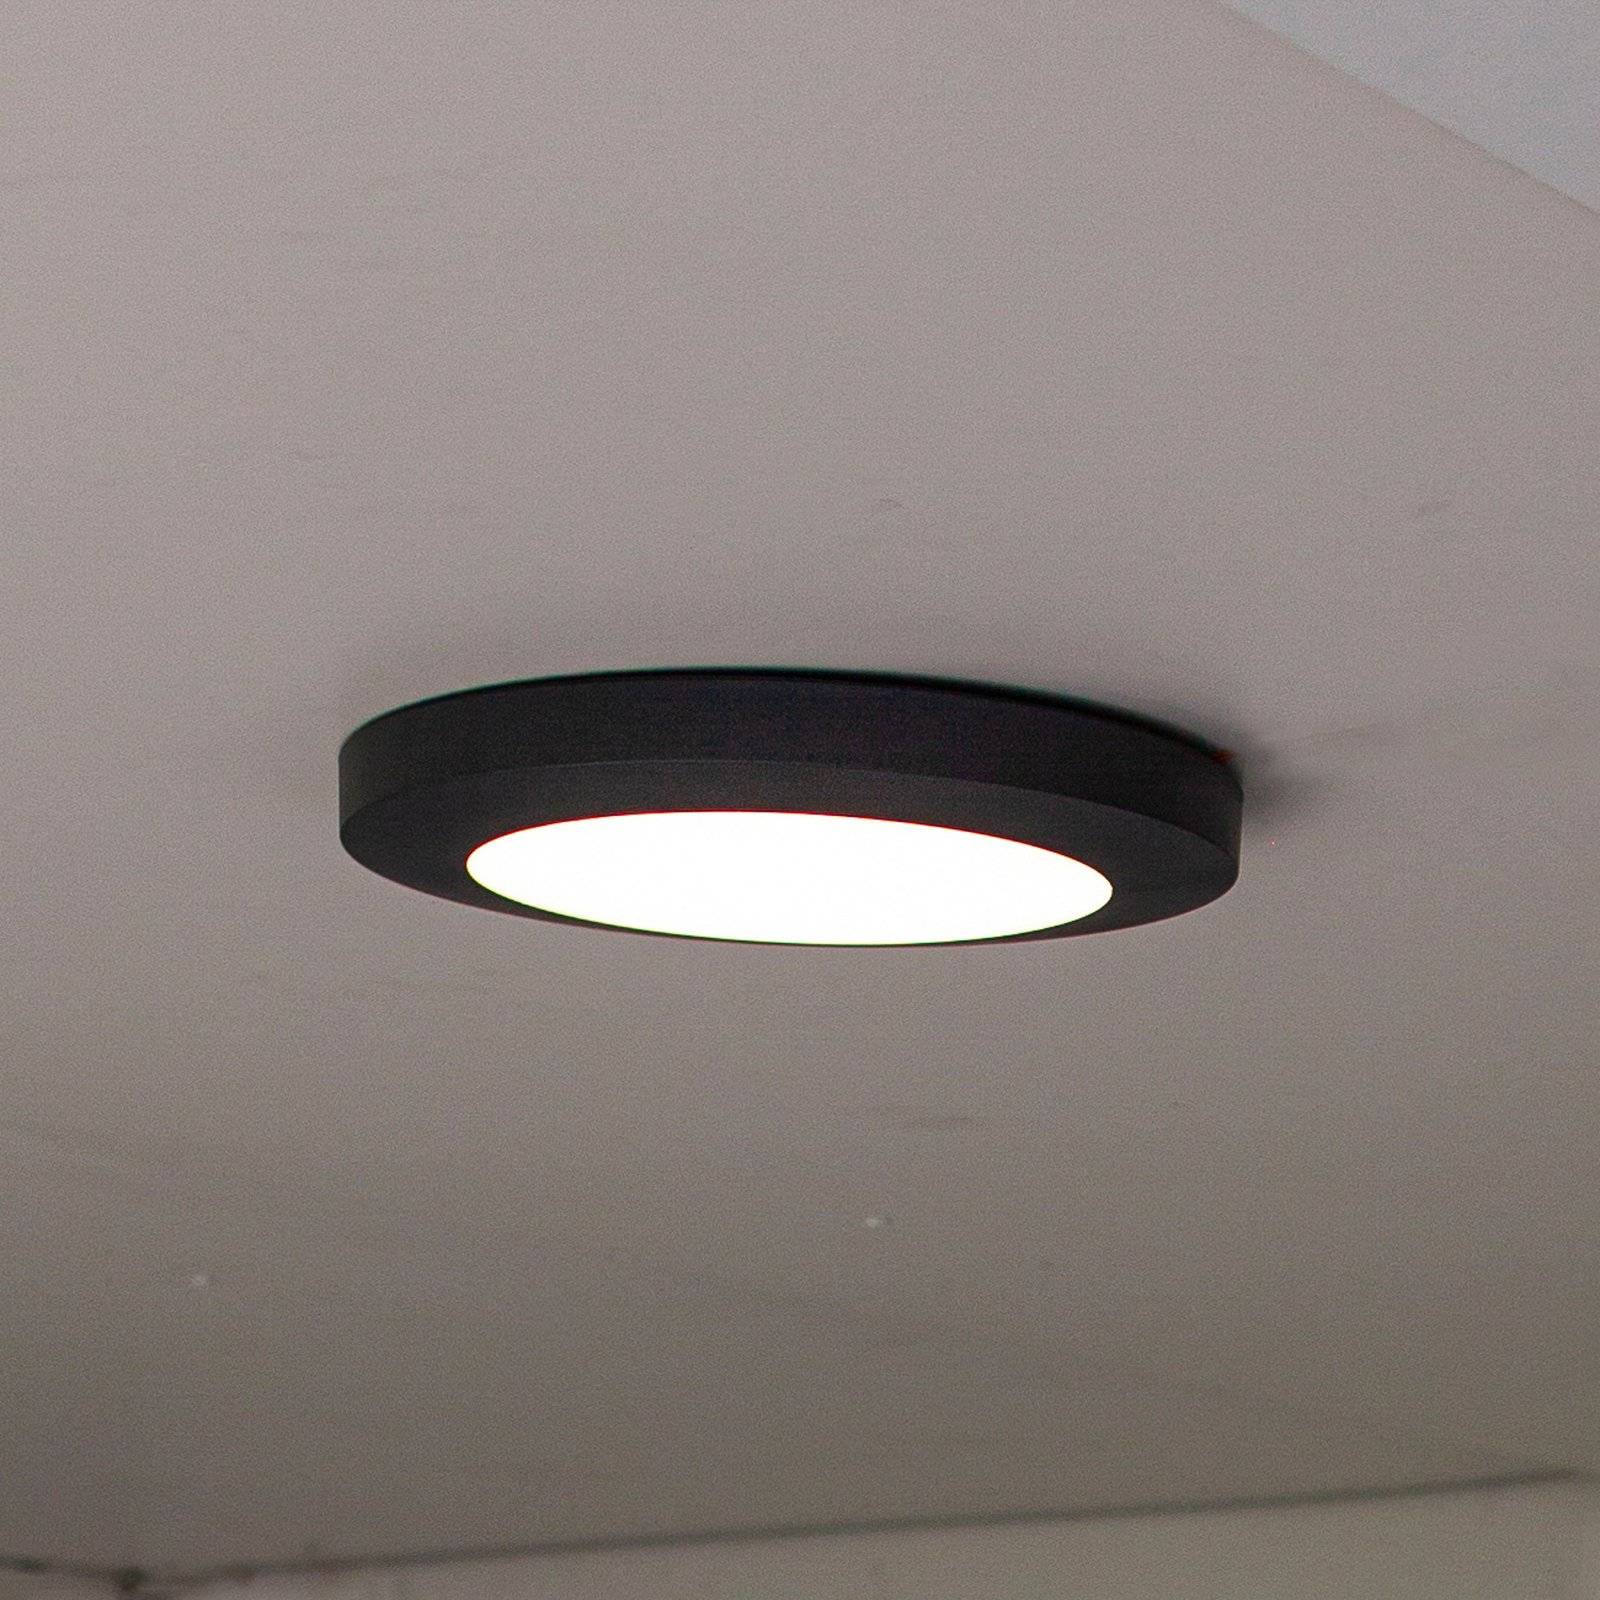 Lampa sufitowa zewnętrzna LED Kayah, IP54